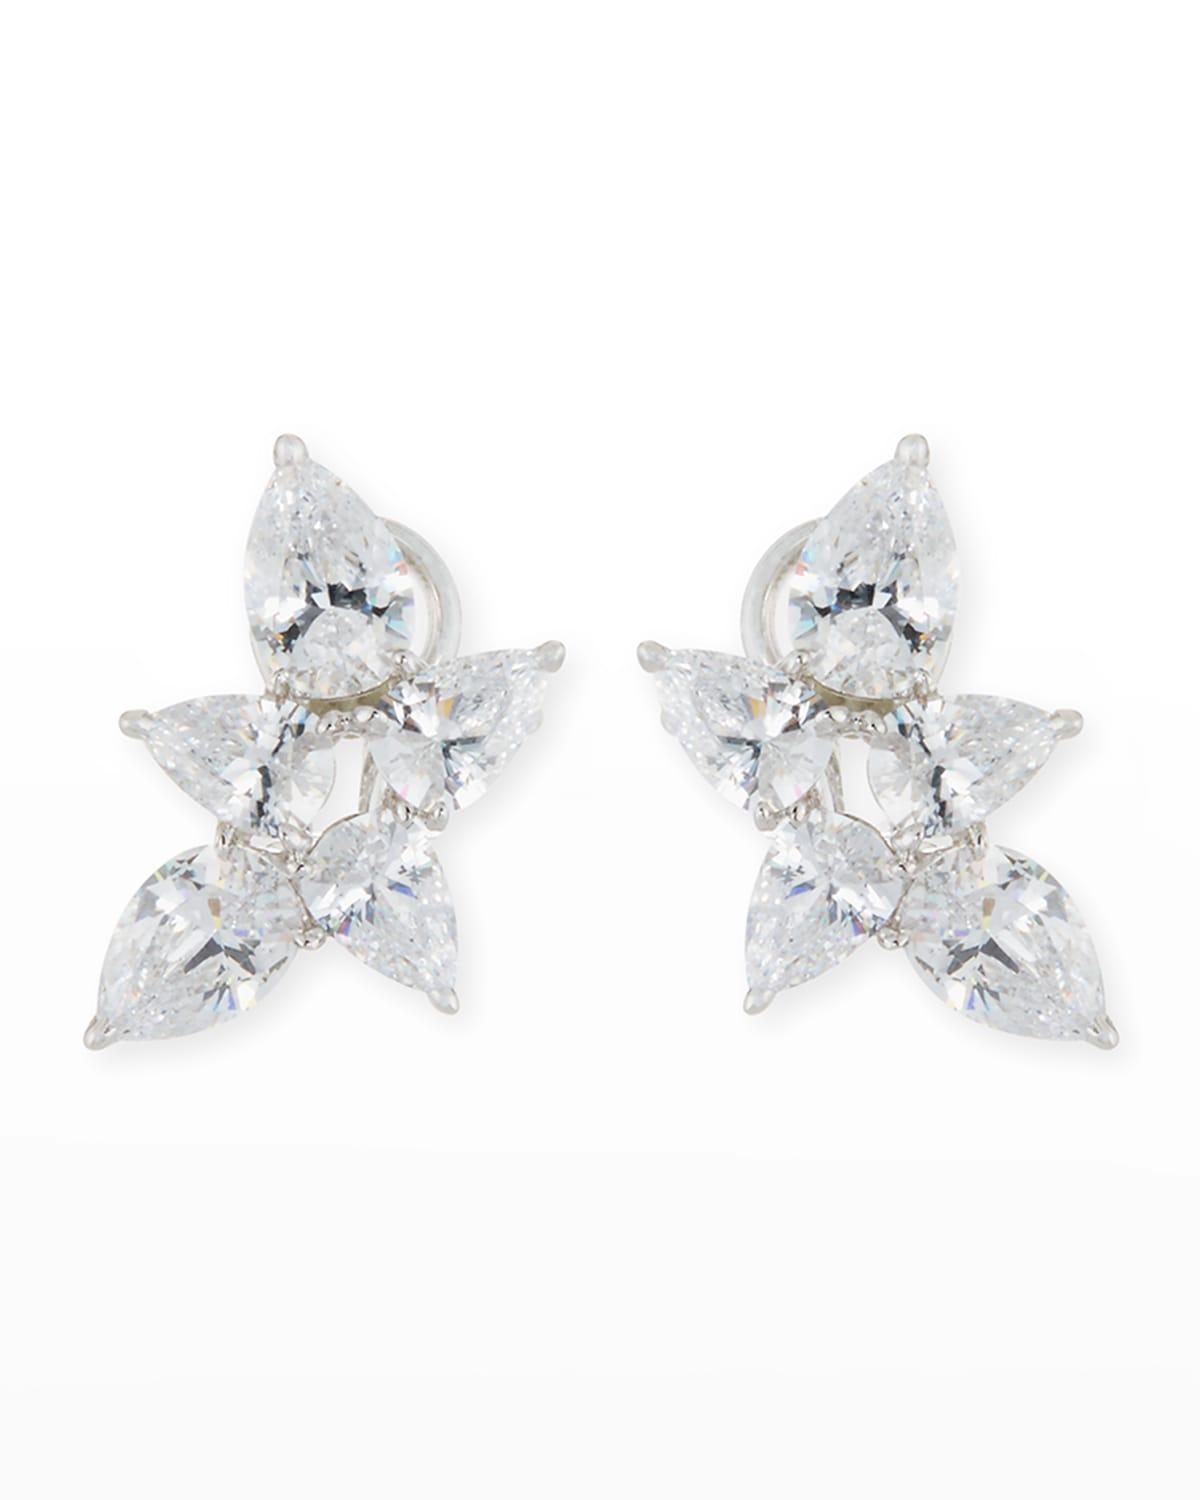 Fantasia by Deserio Pear-shaped Cz Cluster Earrings in Metallic | Lyst